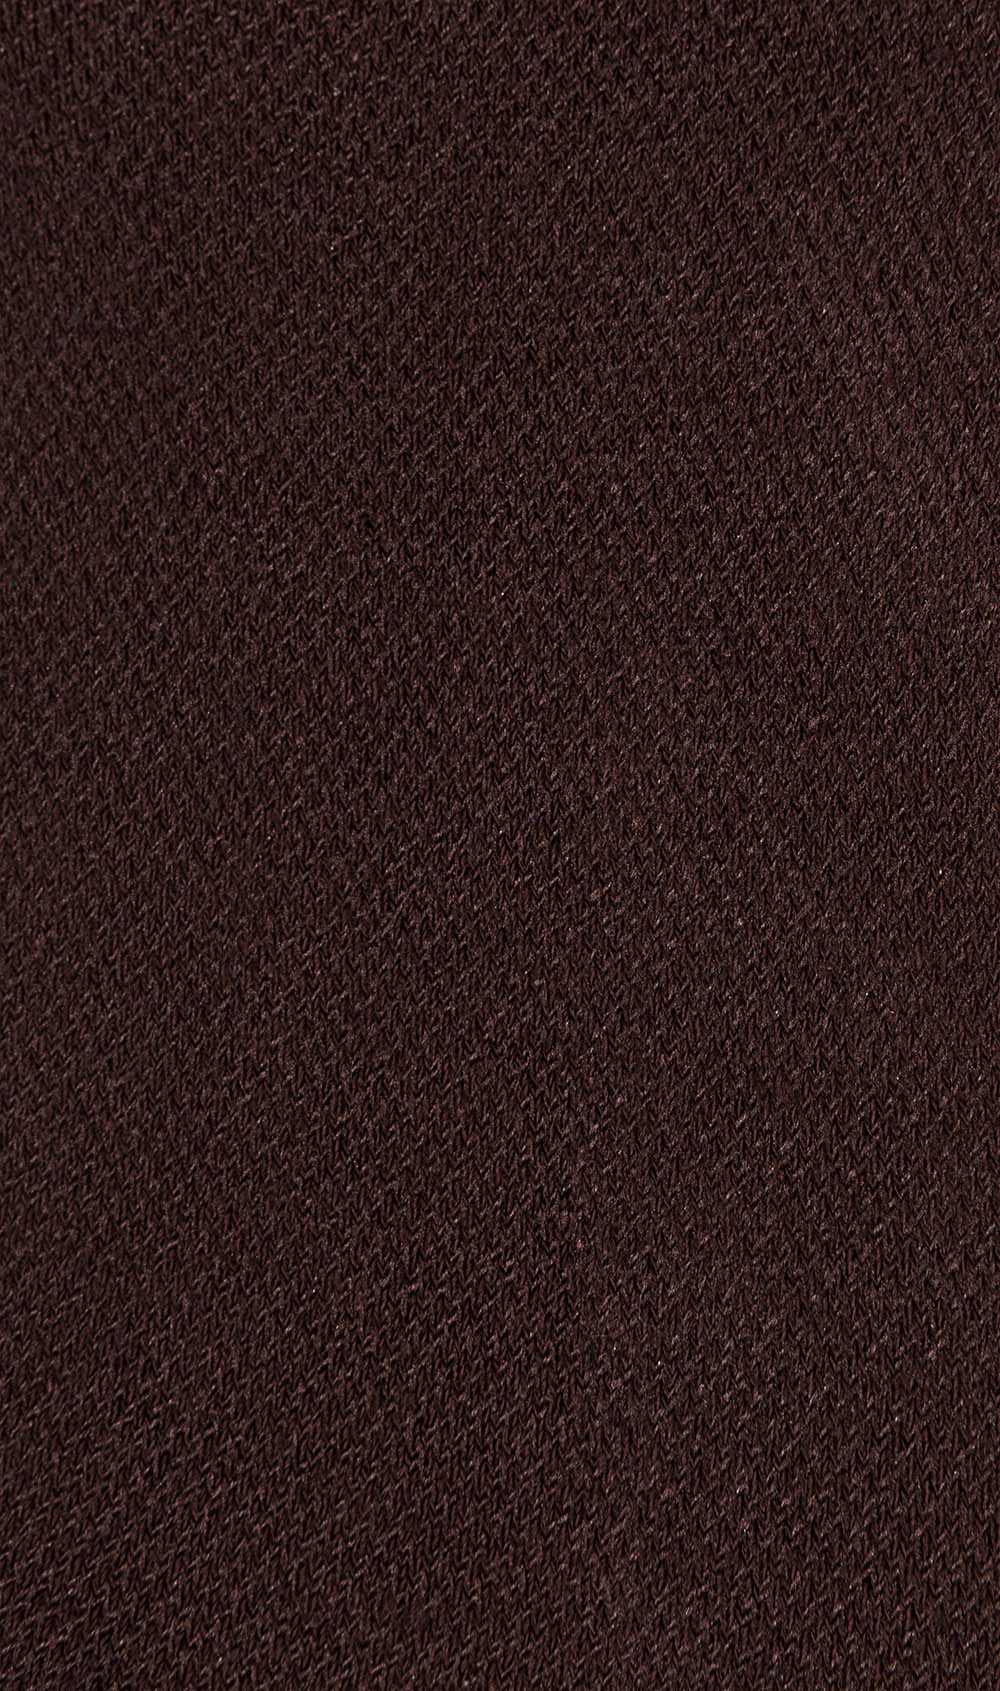 Dark Coffee Brown Low-Cut Socks Pattern